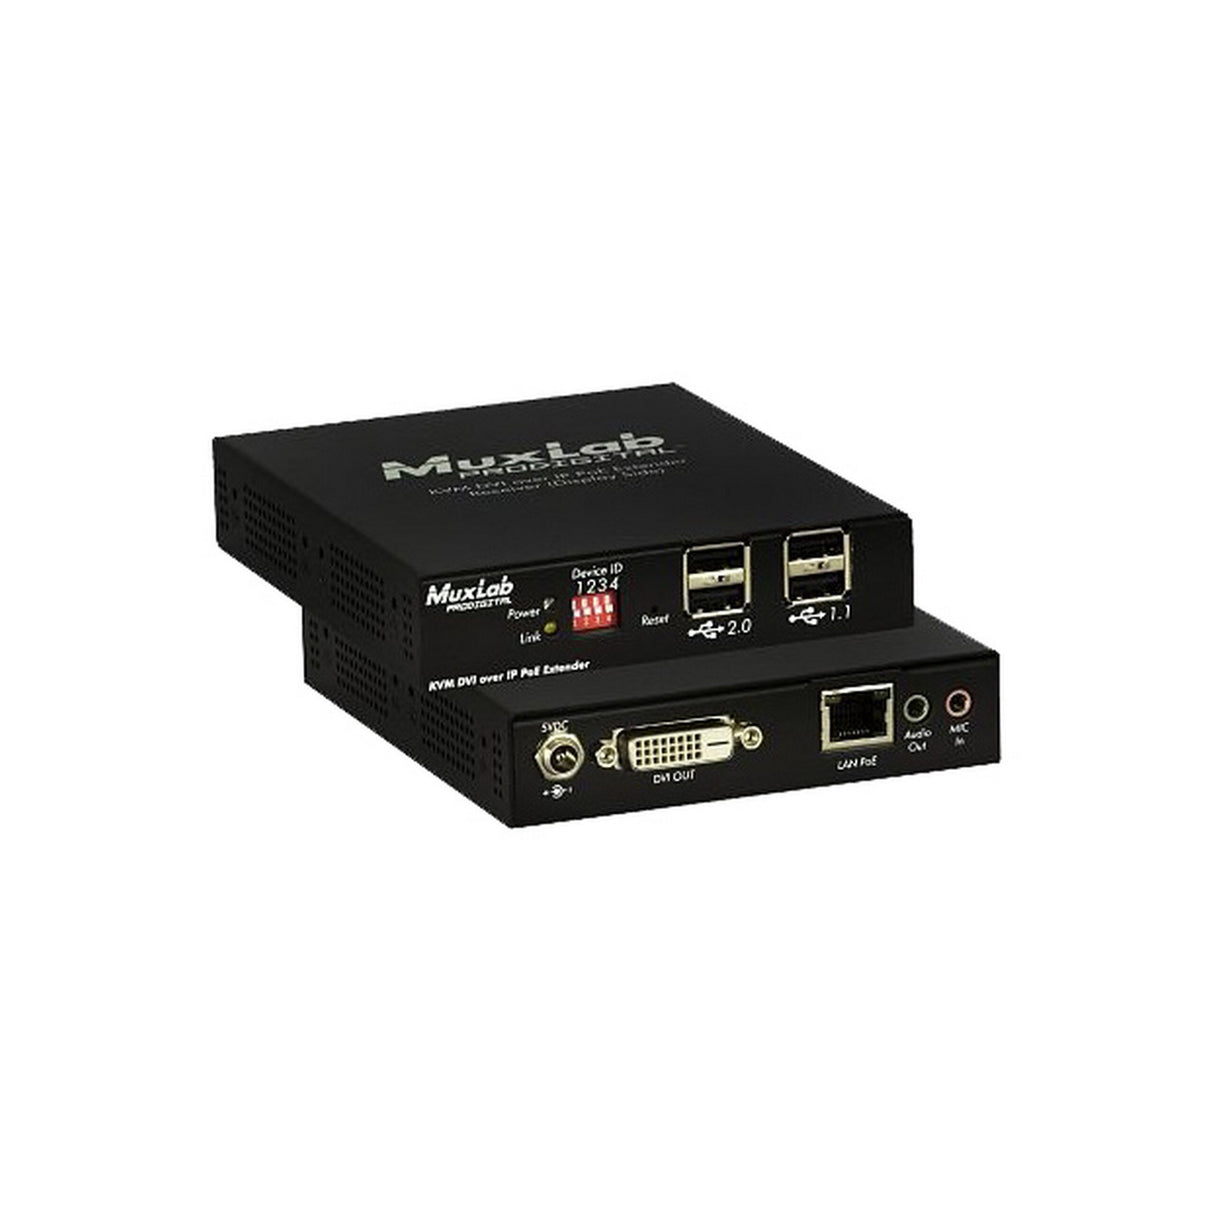 MuxLab 500771-RX DVI/USB2.0 KVM Over IP PoE Extender Receiver